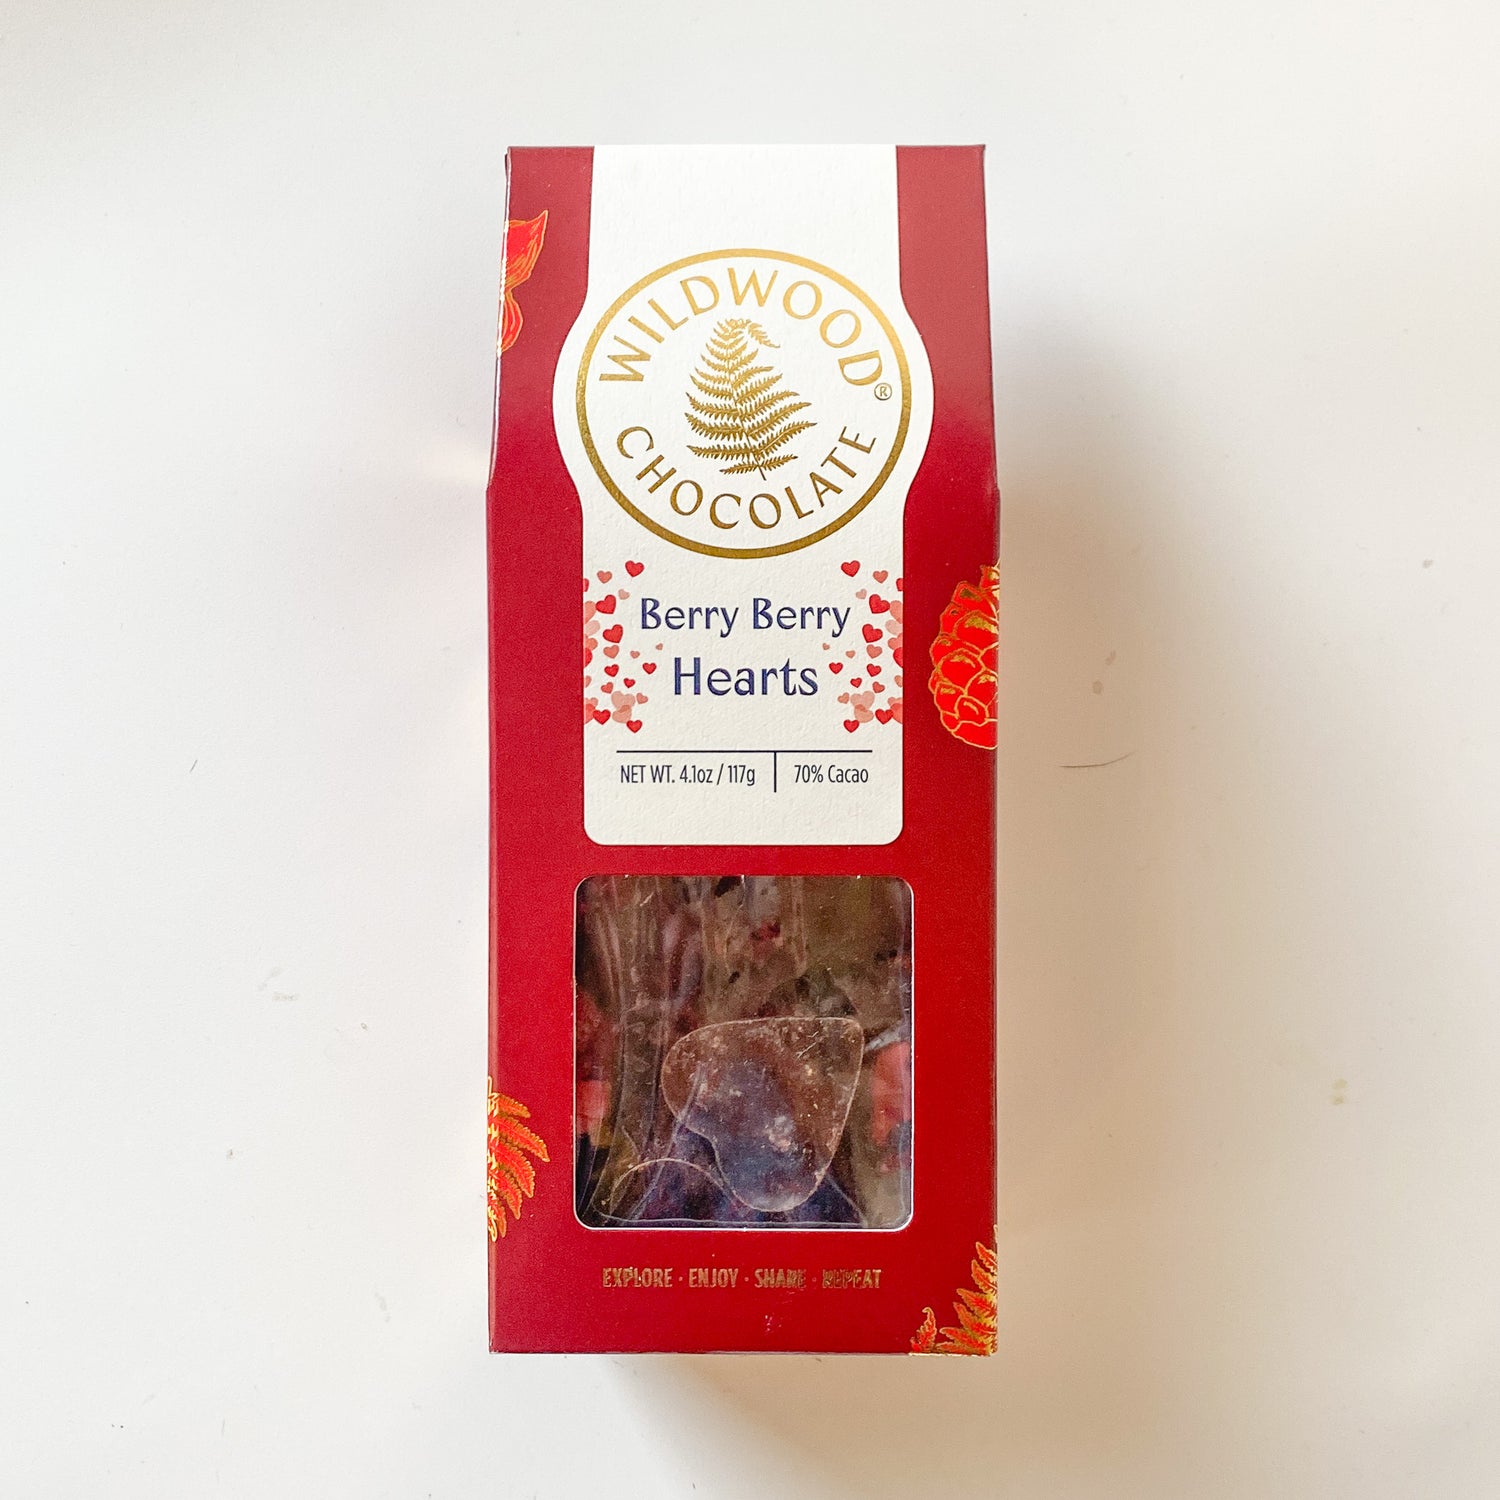 Chocolate: Wildwood Berry Berry Hearts